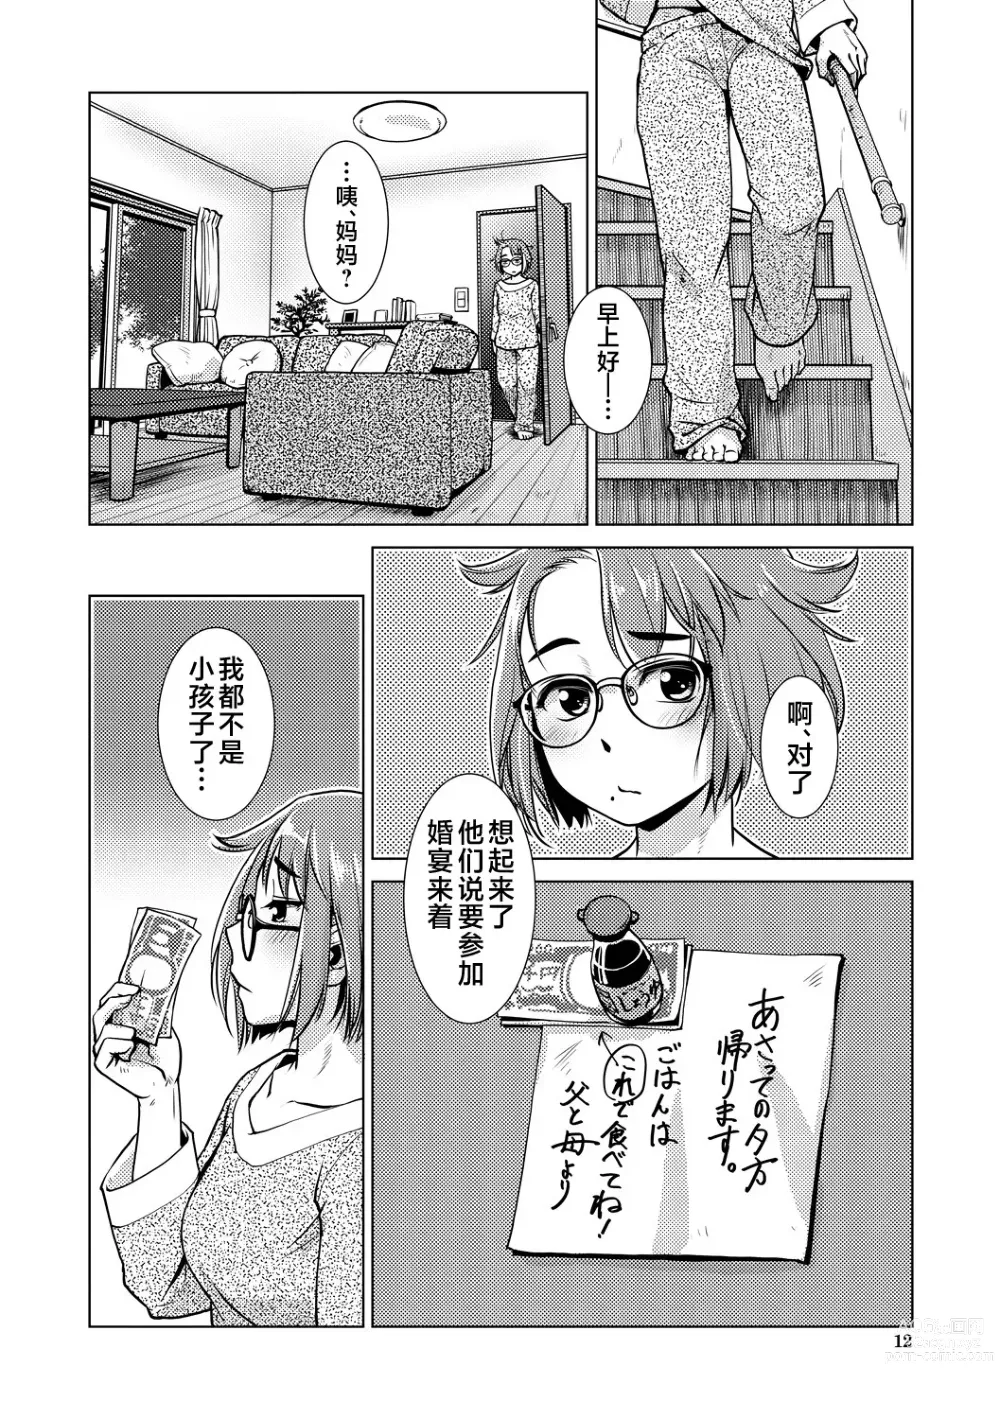 Page 12 of manga Futanari Noukou Haramase Ai